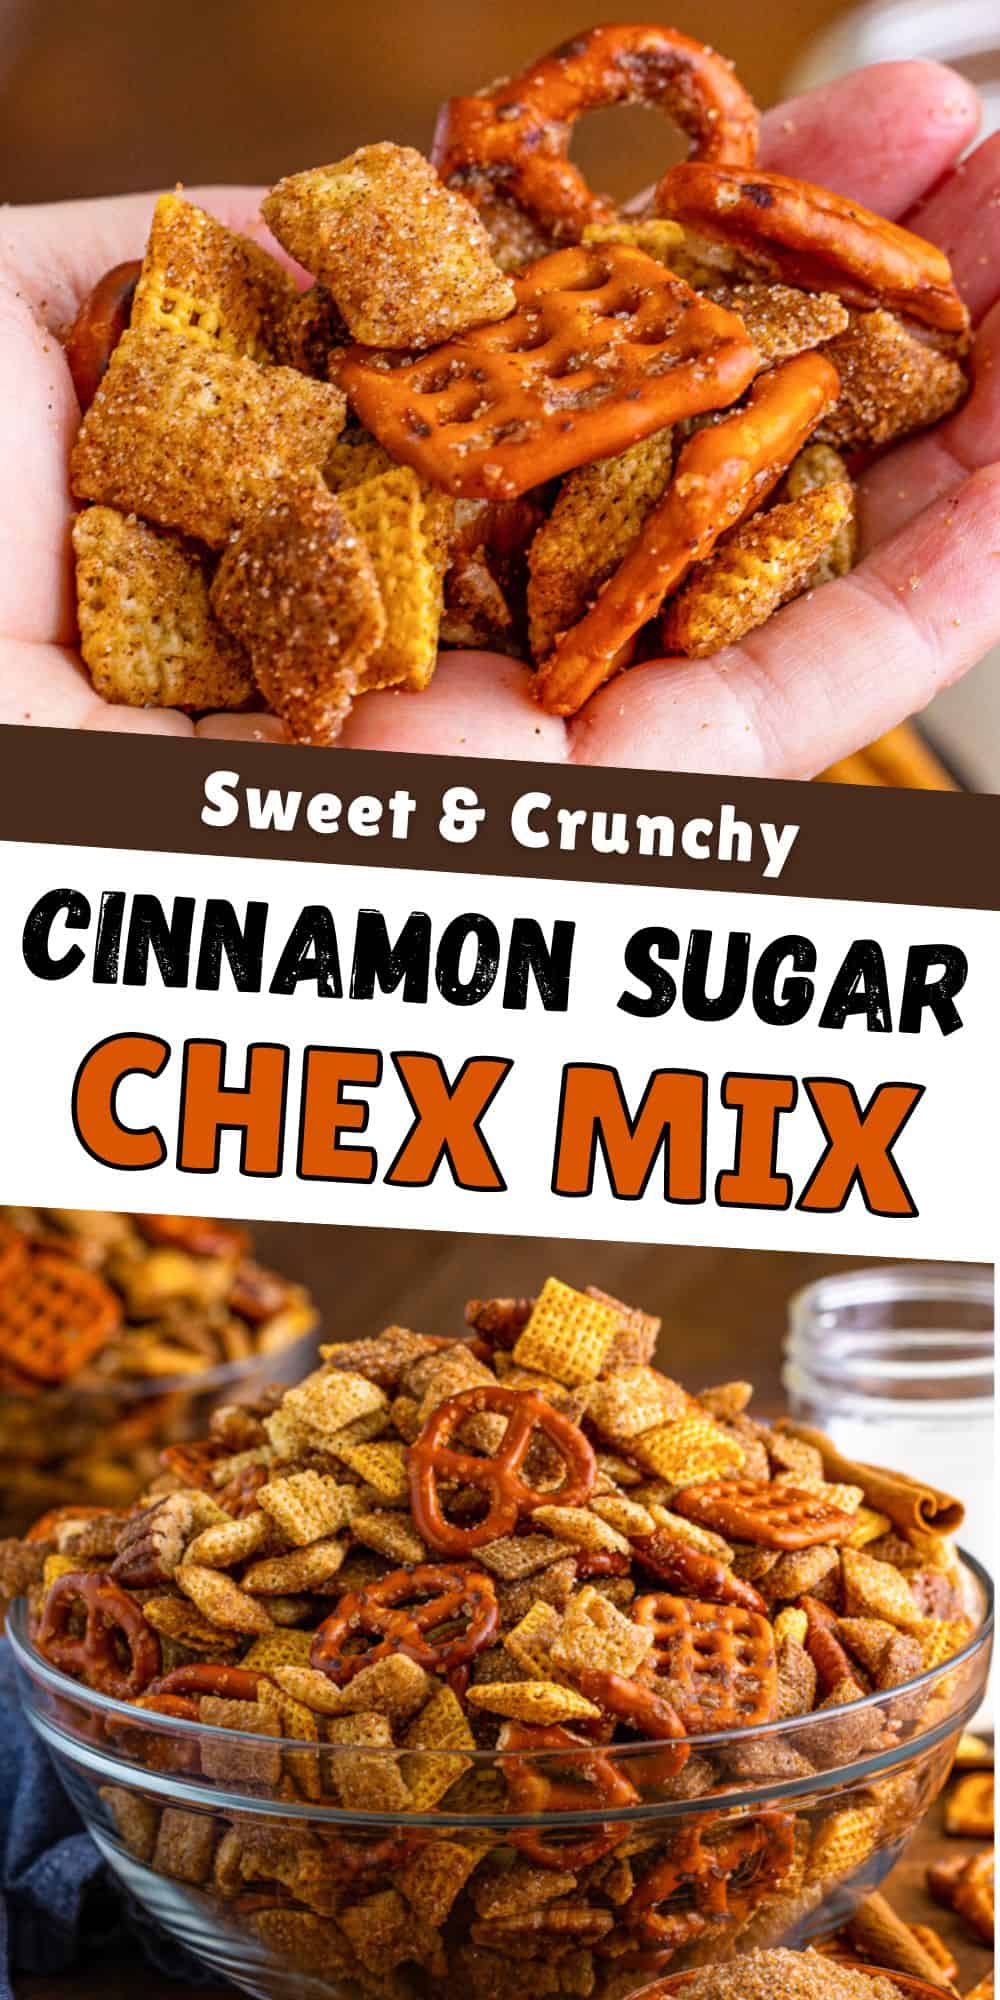 Sweet and crunchy Cinnamon Sugar Chex Mix.